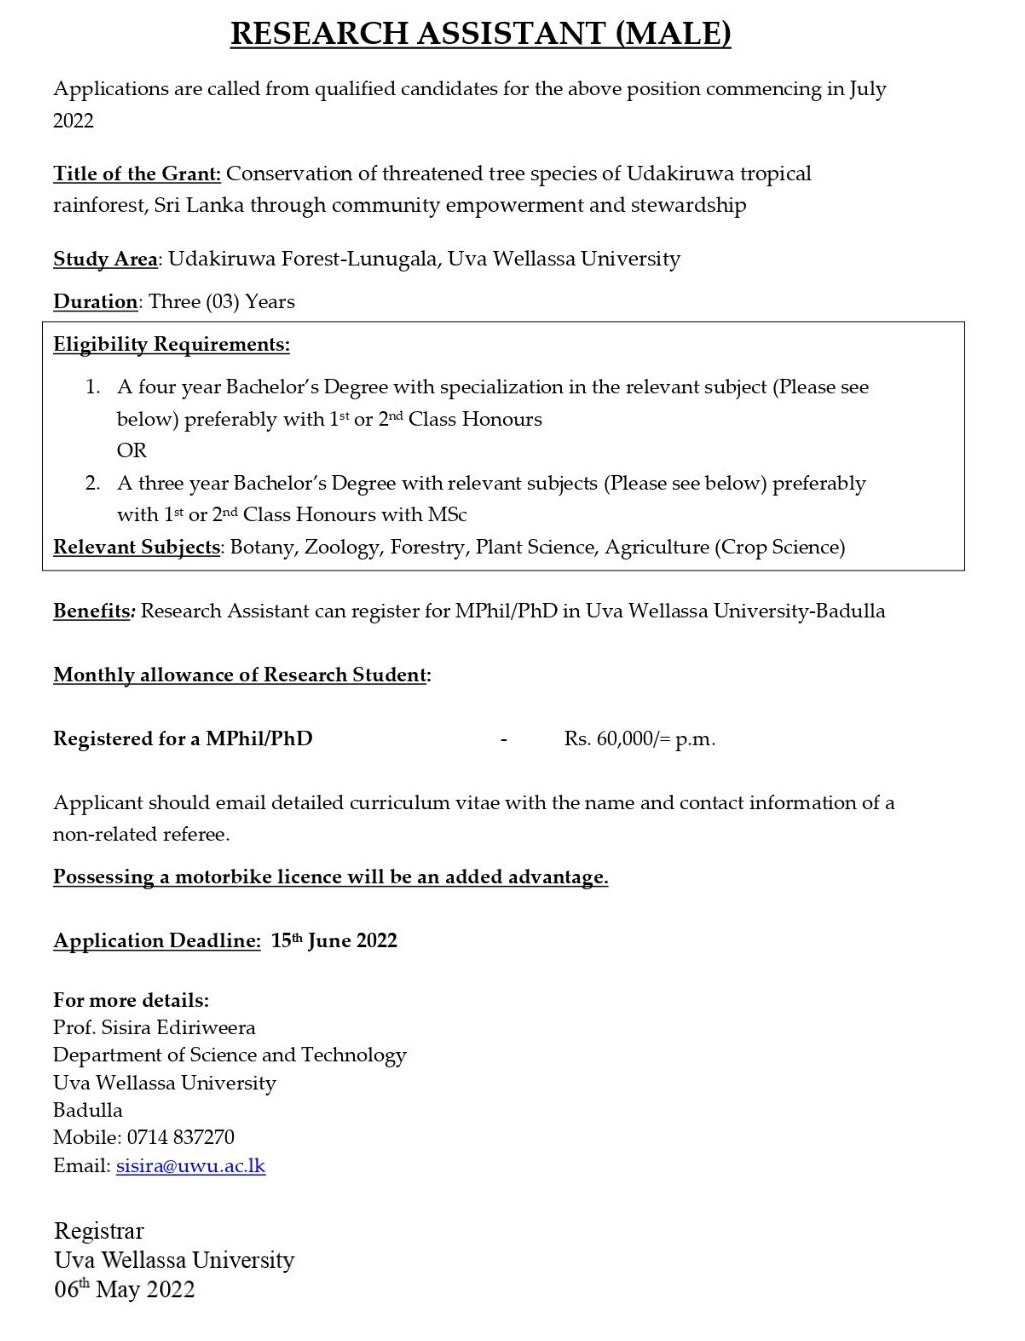 Research Assistant Vacancy 2022 in Uva Wellassa University